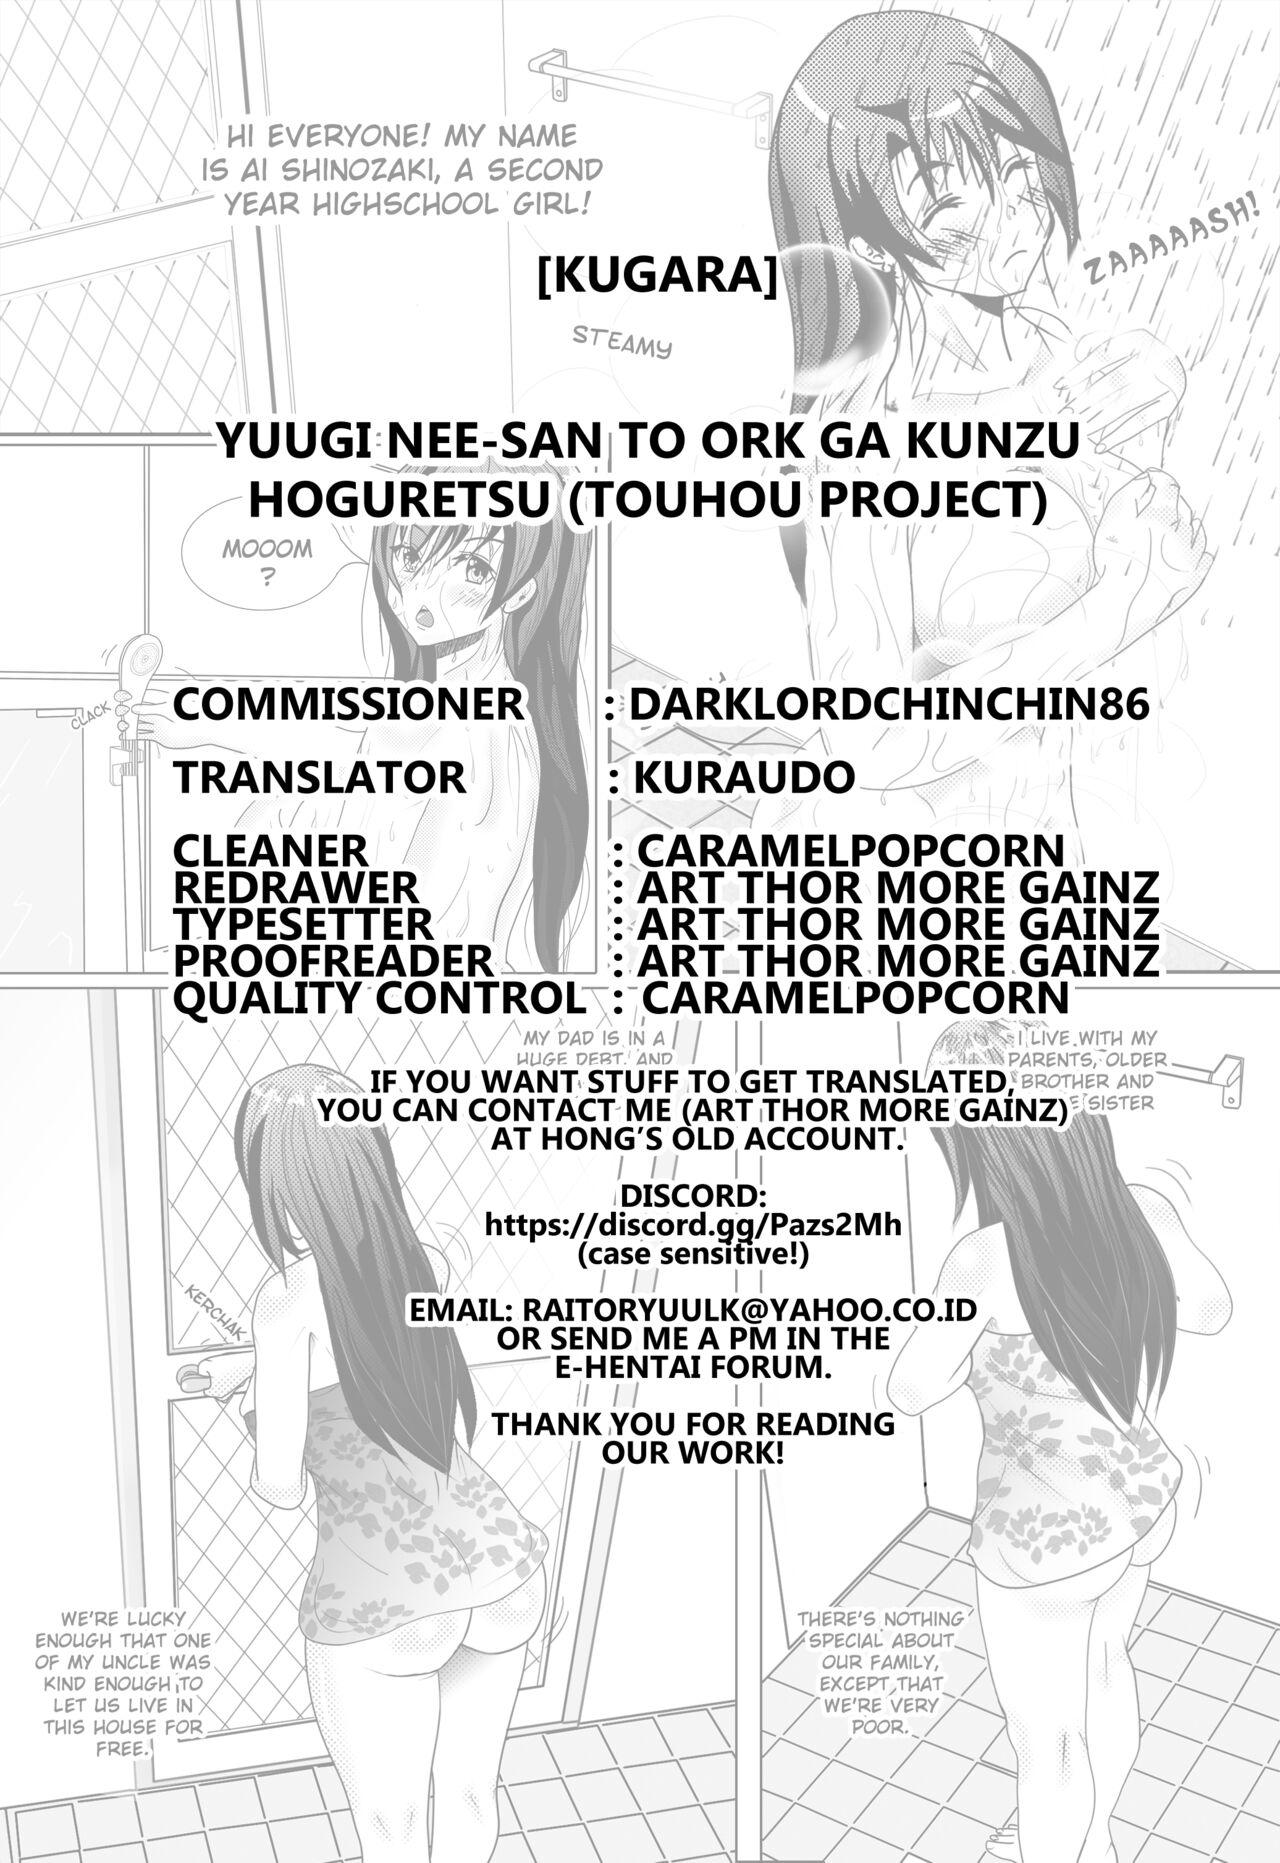 Argentina Yuugi Nee-san to Ork ga kunzu hoguretsu - Touhou project Storyline - Page 31